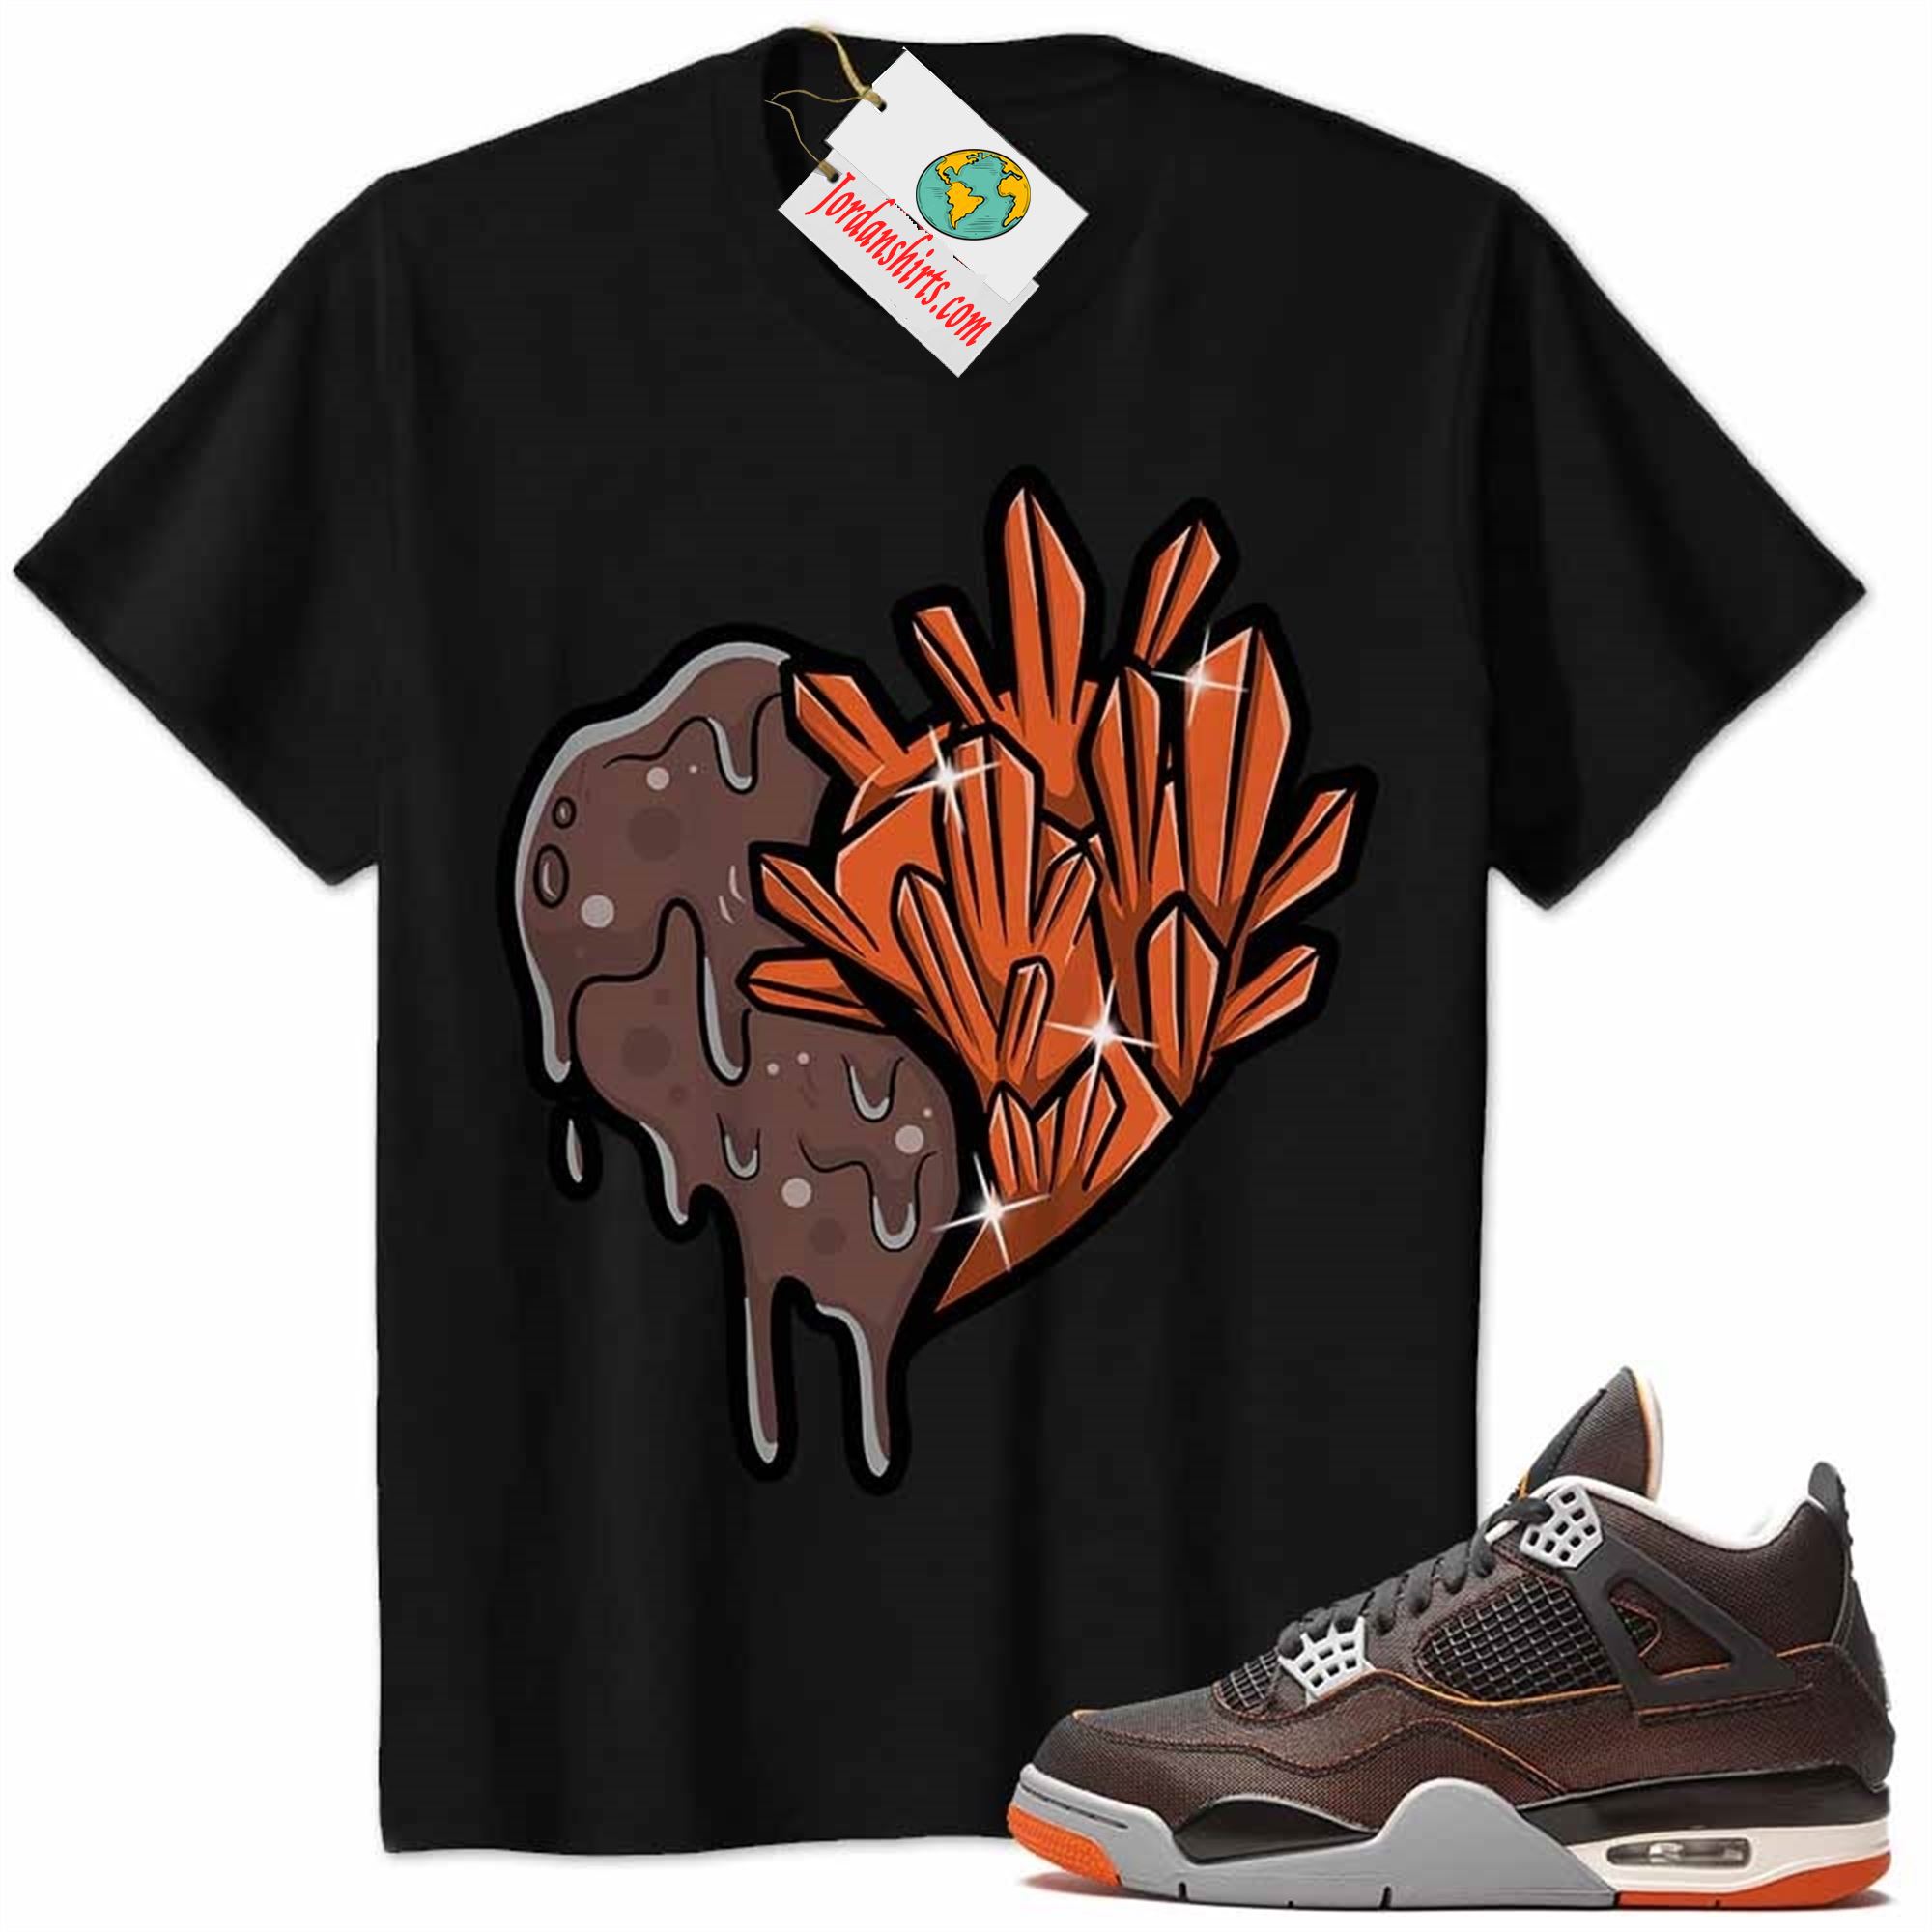 Jordan 4 Shirt, Crystal And Melt Heart Black Air Jordan 4 Starfish 4s Size Up To 5xl